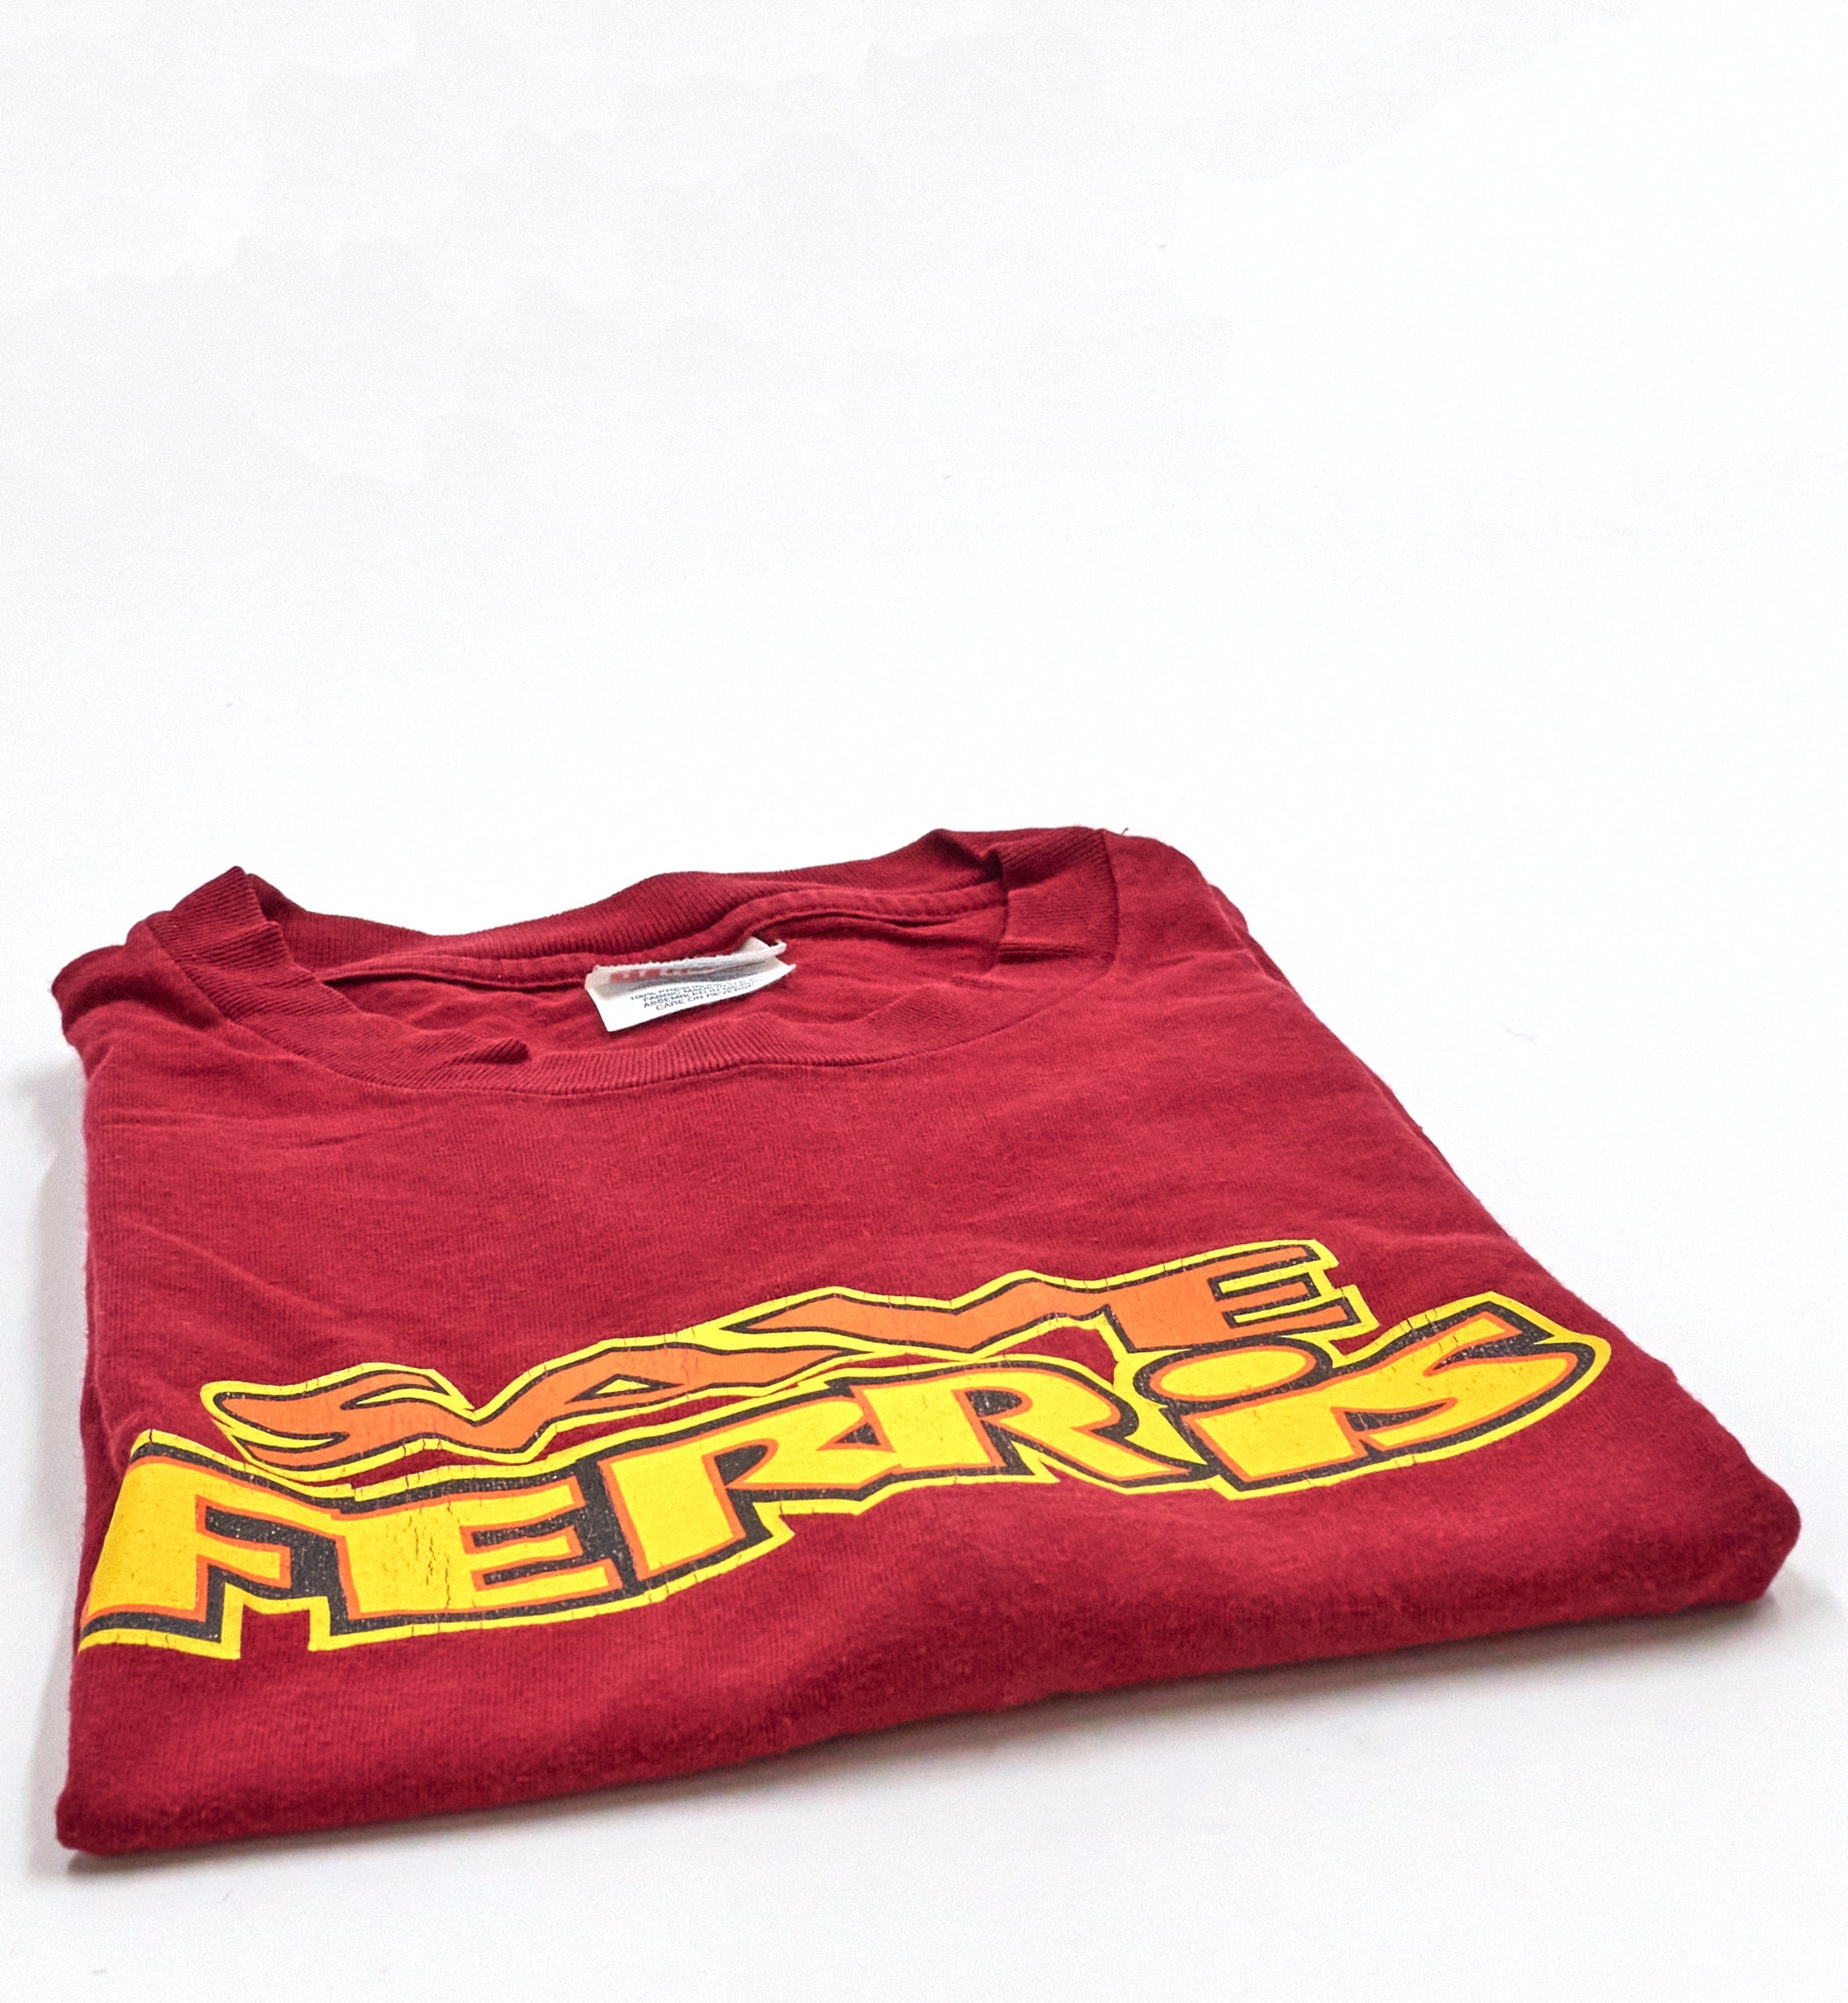 Save Ferris - Save Ferris Logo (Red) Tour Shirt Size Large